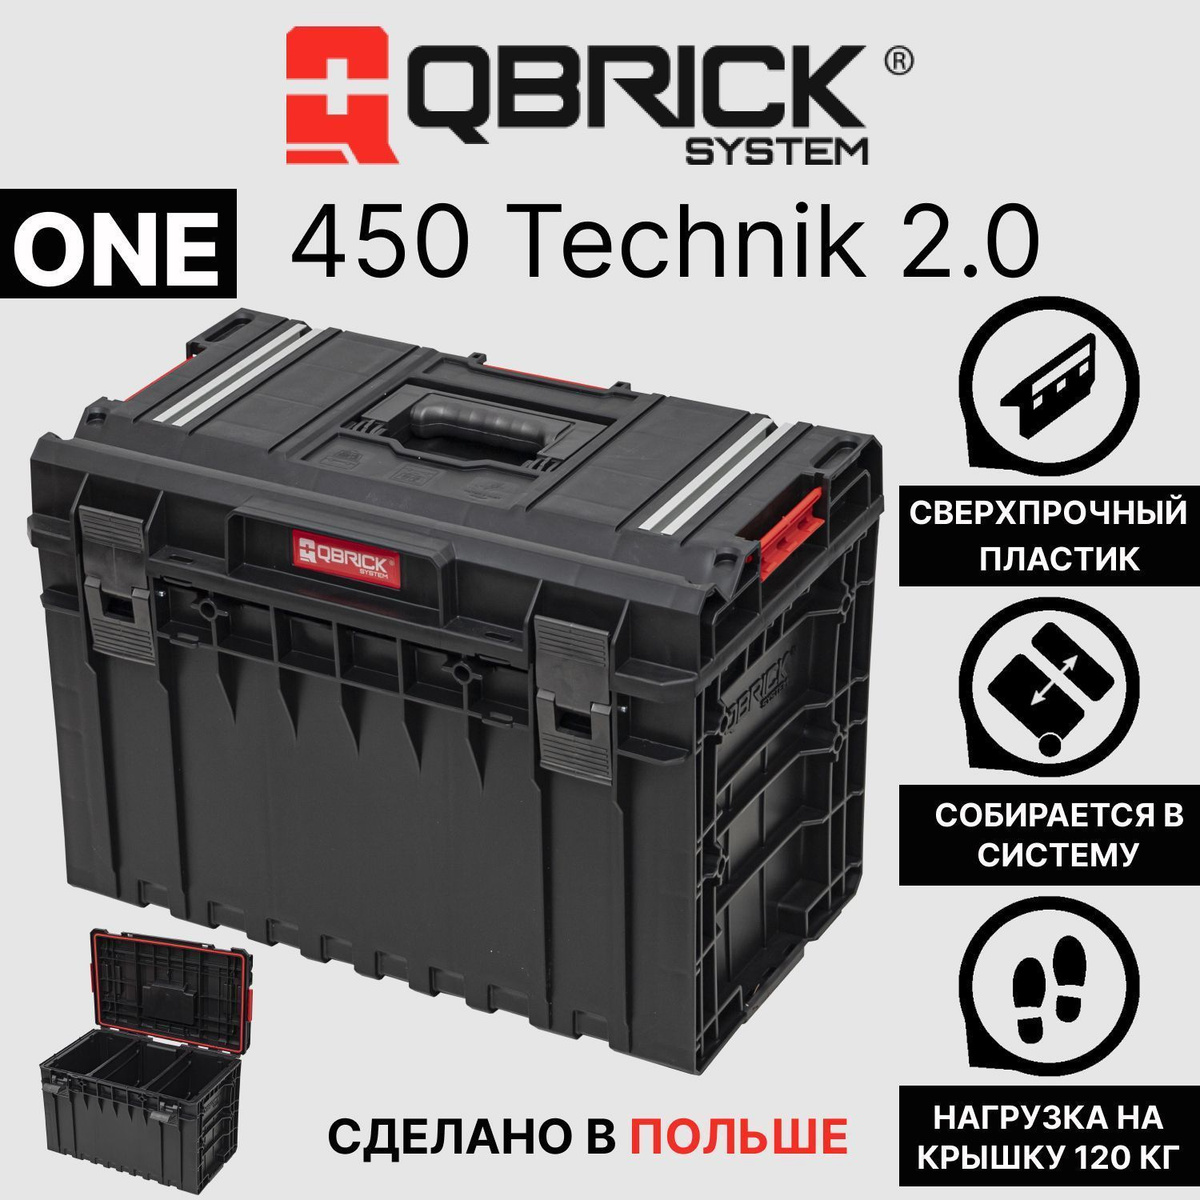 Qbrick System ONE 450 Technik 2.0